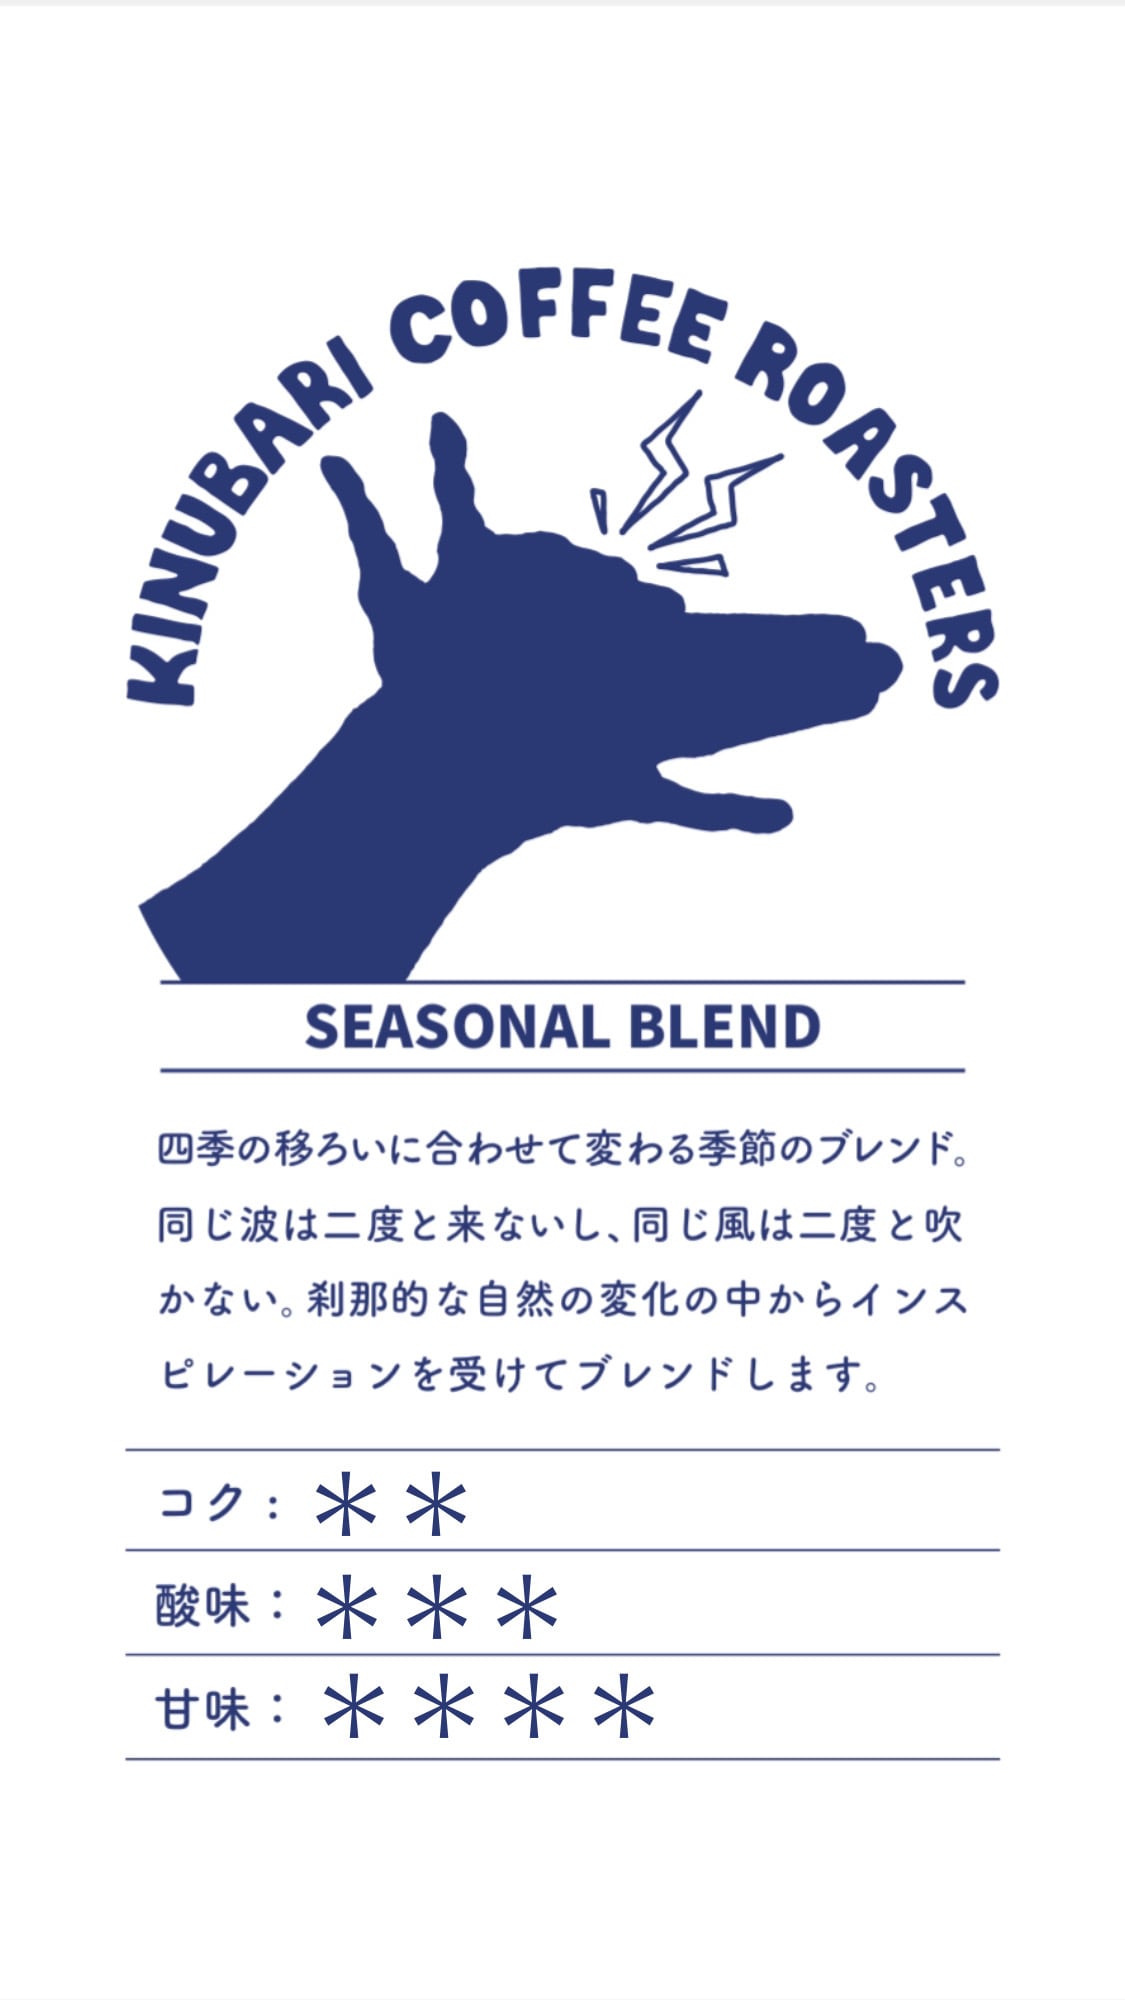 【Seasonal Blend】 「HARUKAZE」150g【期間限定】